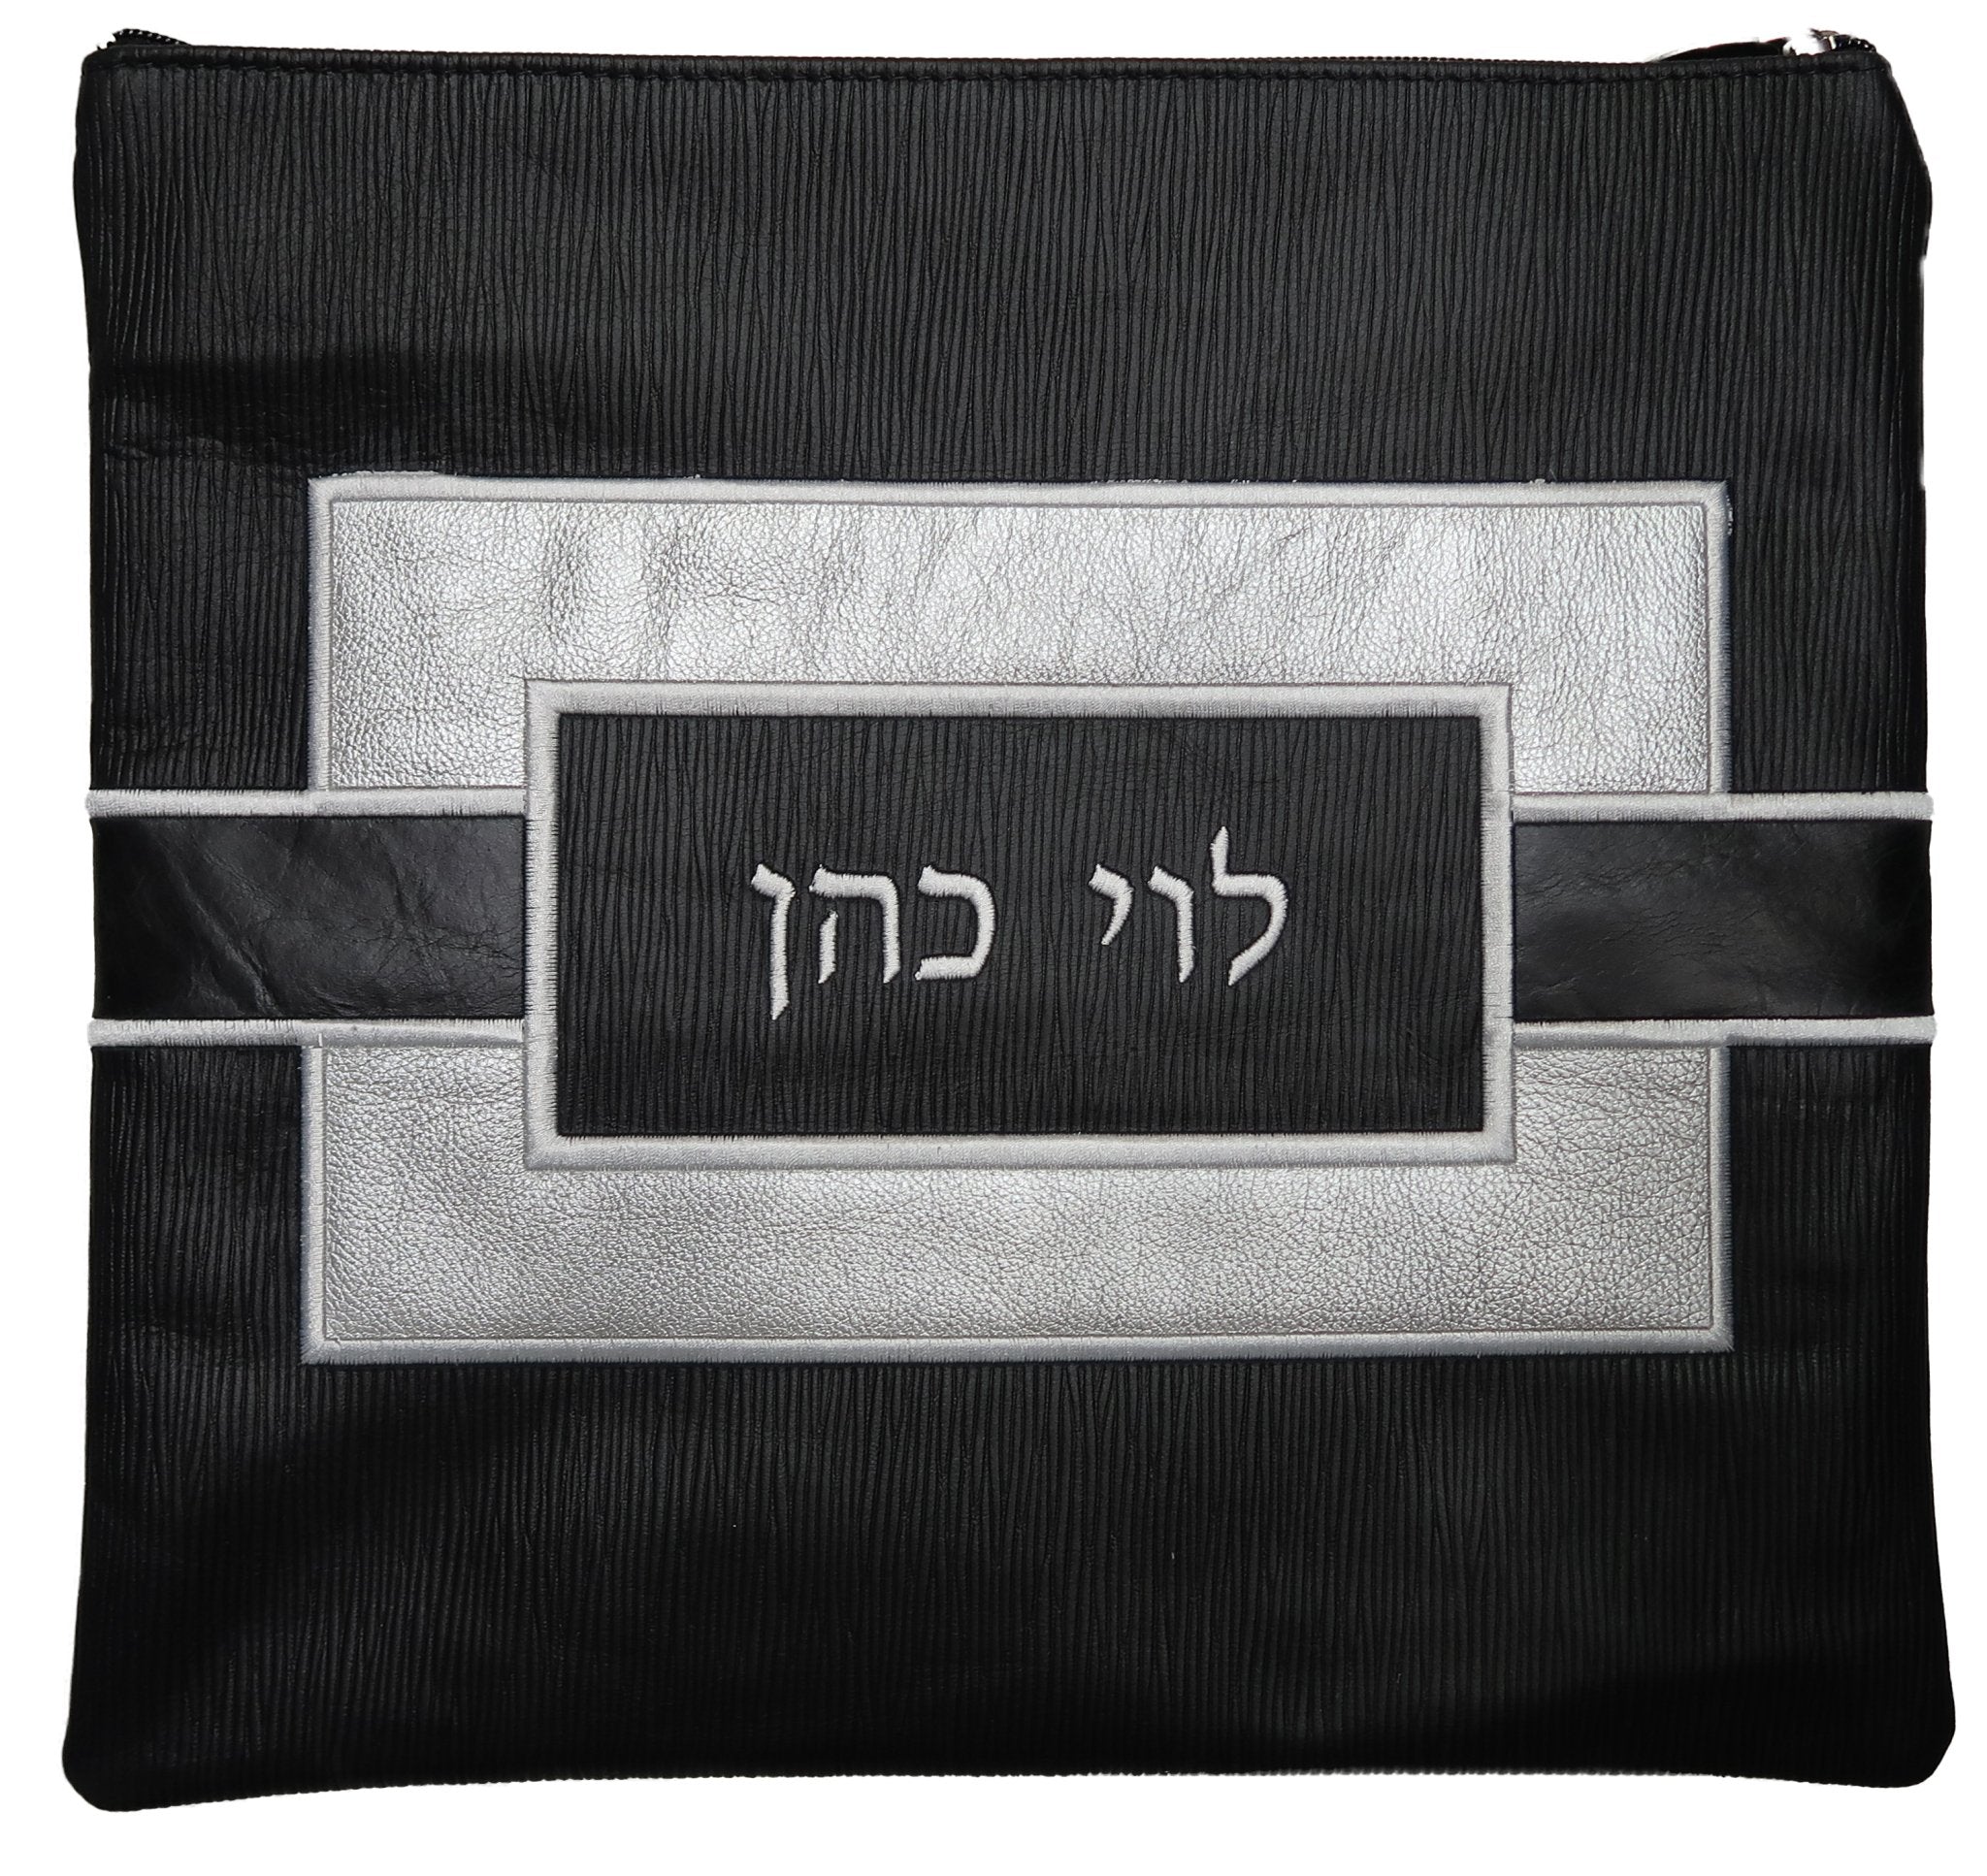 3 dimensional frame Tallis Tefillin bag design - Simcha Couture